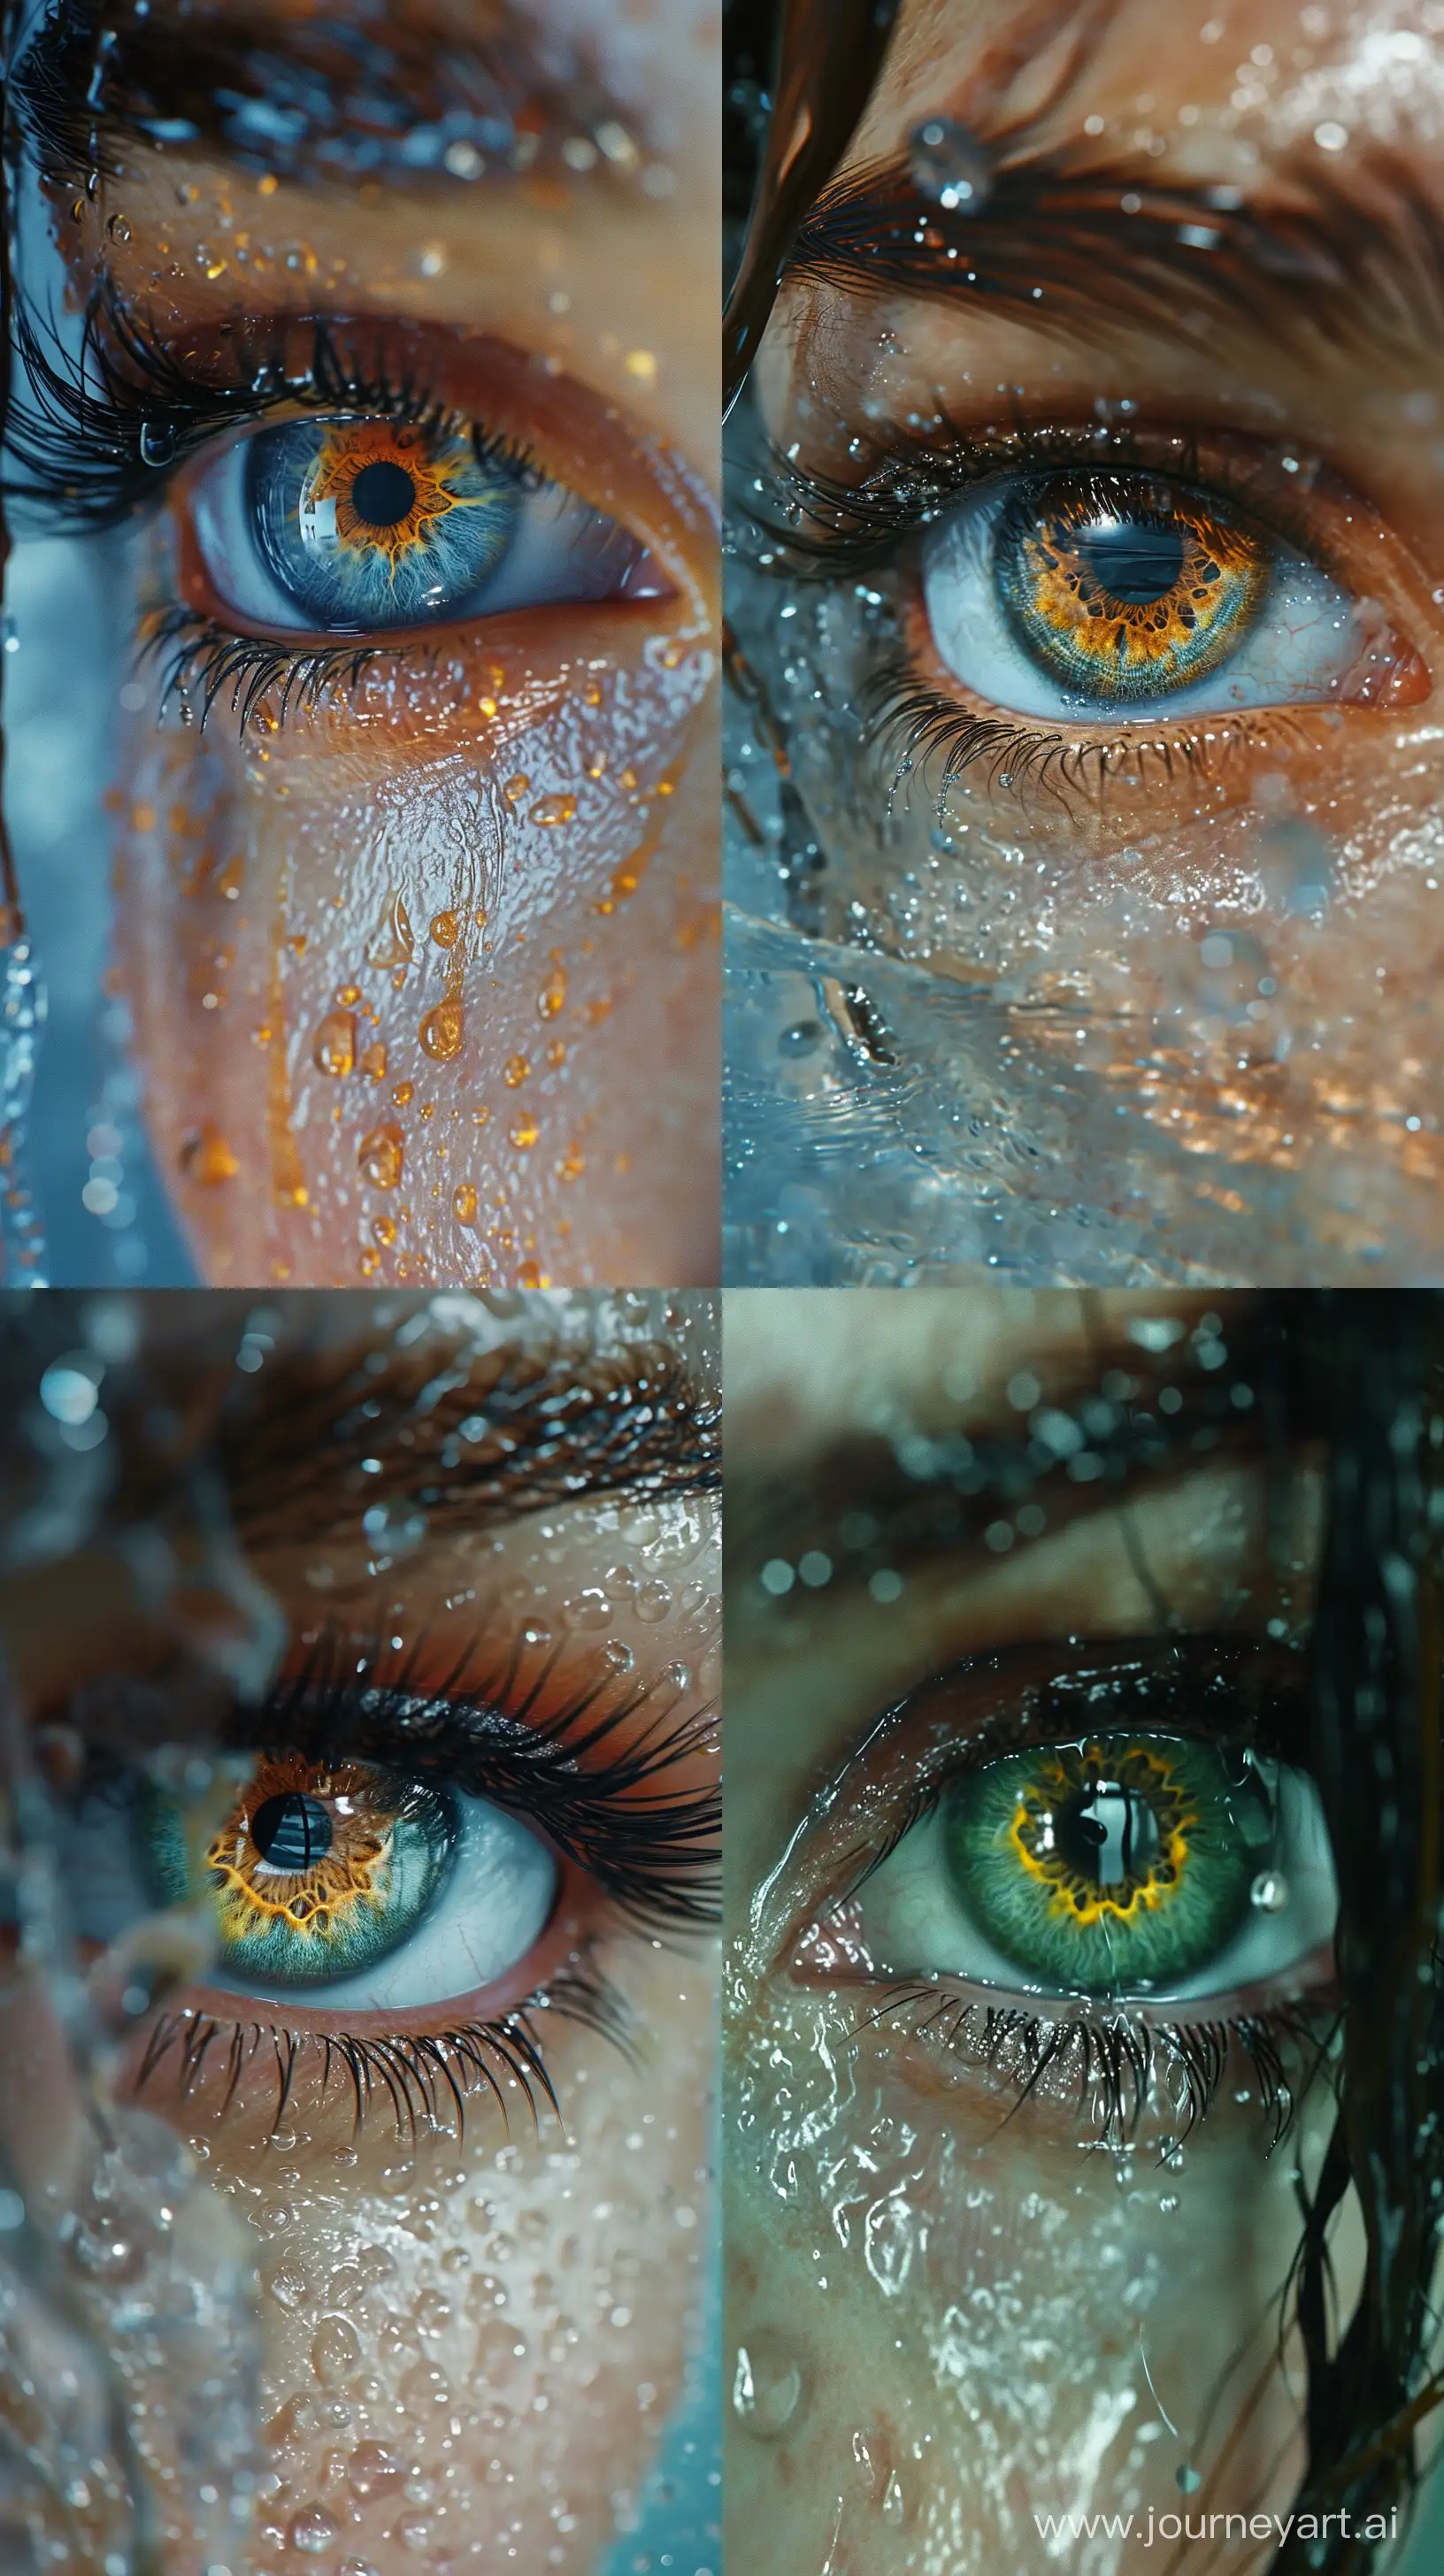 Mesmerizing-Macro-Photography-Enchanting-Eye-Captured-in-a-Glistening-Water-Drop